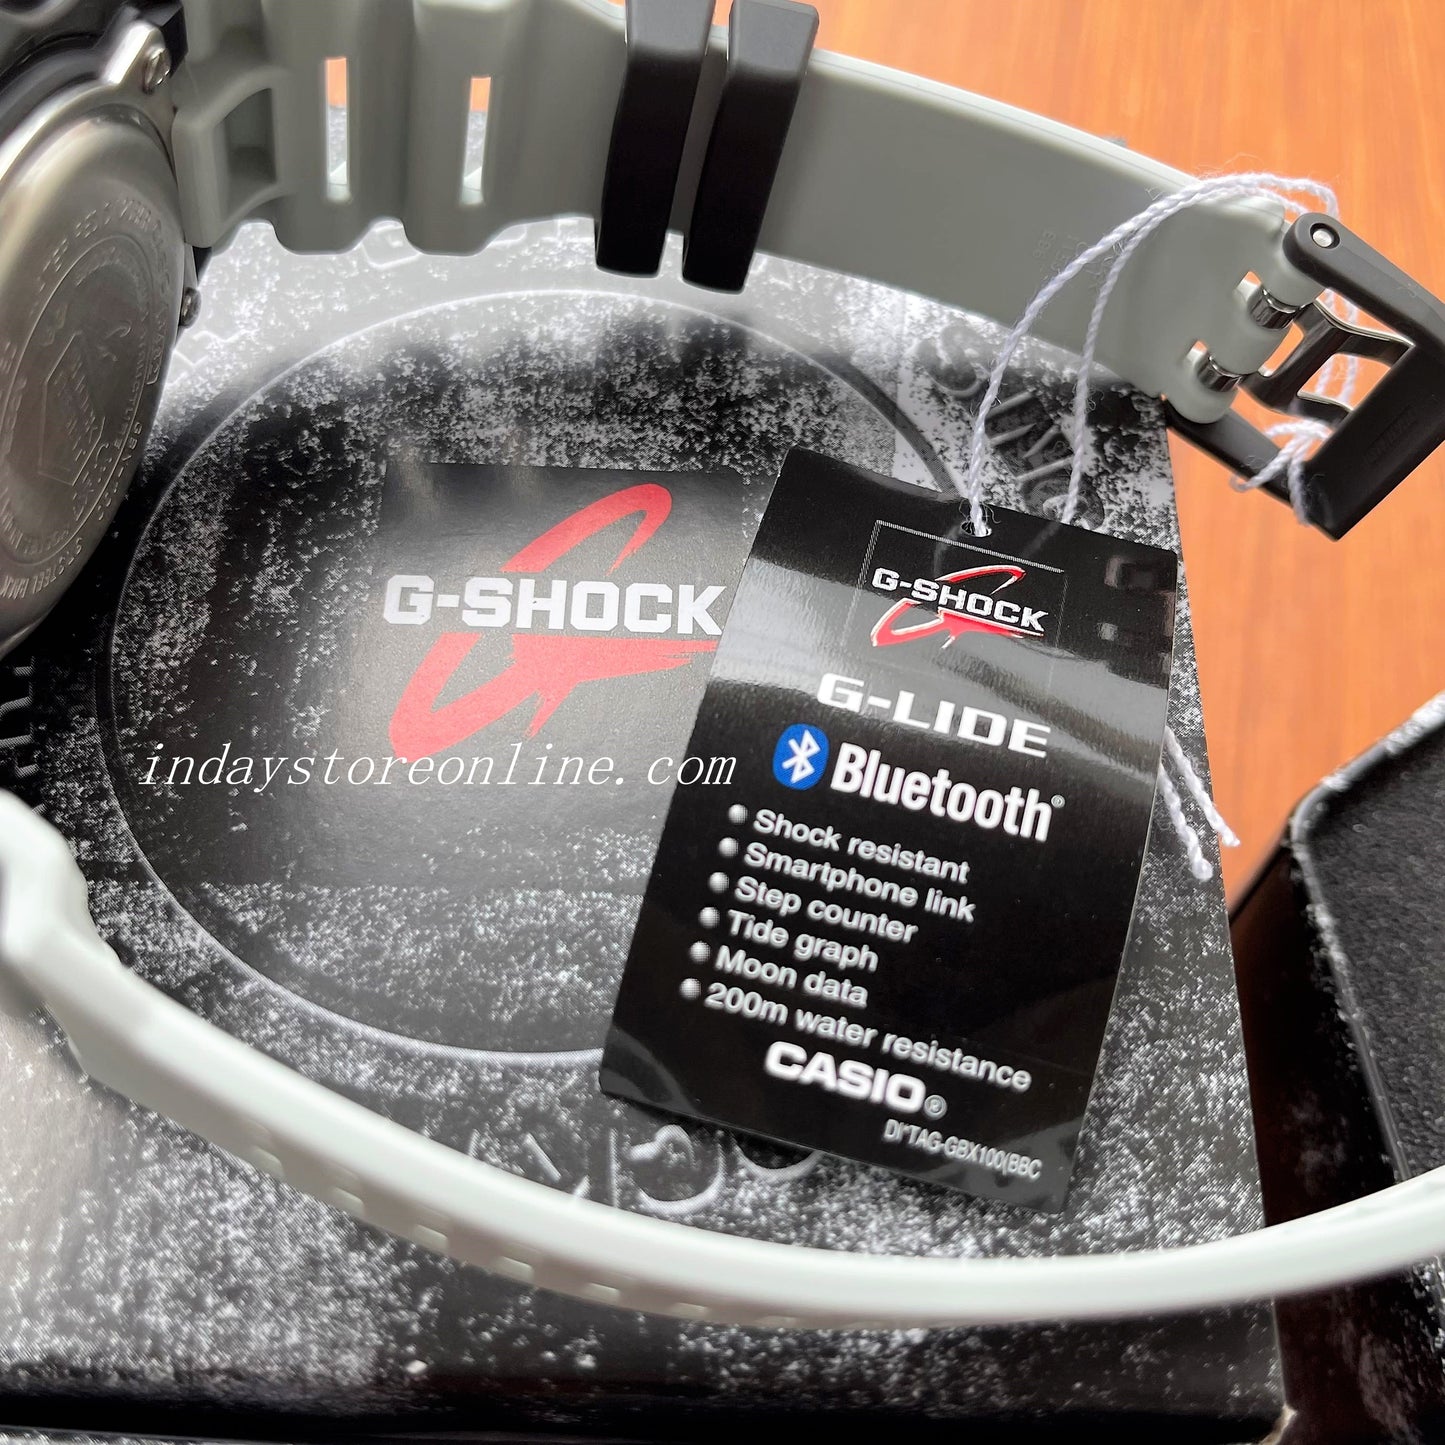 Casio G-Shock Men's Watch GBX-100TT-8  G-Lide  GBX-100 Series G-Shock Move Sports Watch Mobile link (Wireless linking using Bluetooth®)